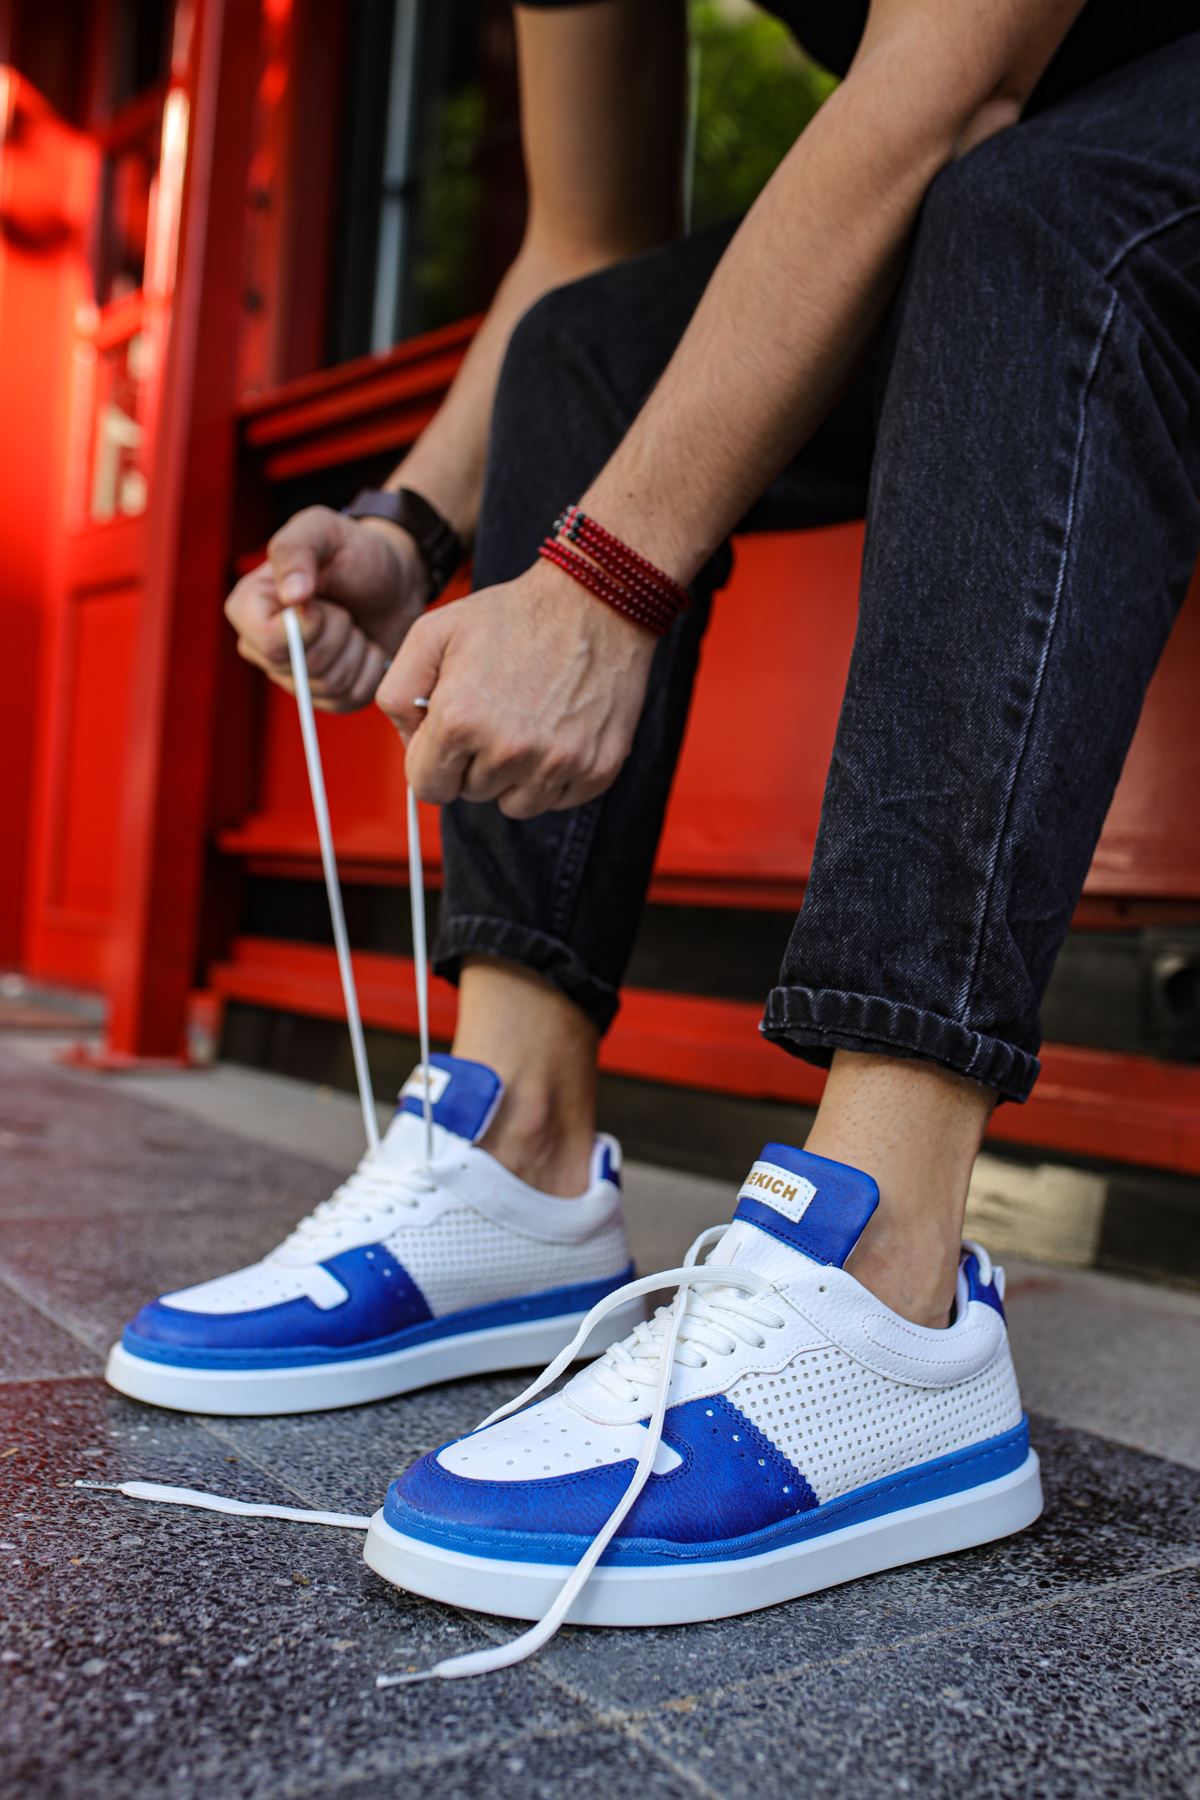 CH201 BT Men's Shoe SAX BLUE/WHITE - STREET MODE ™